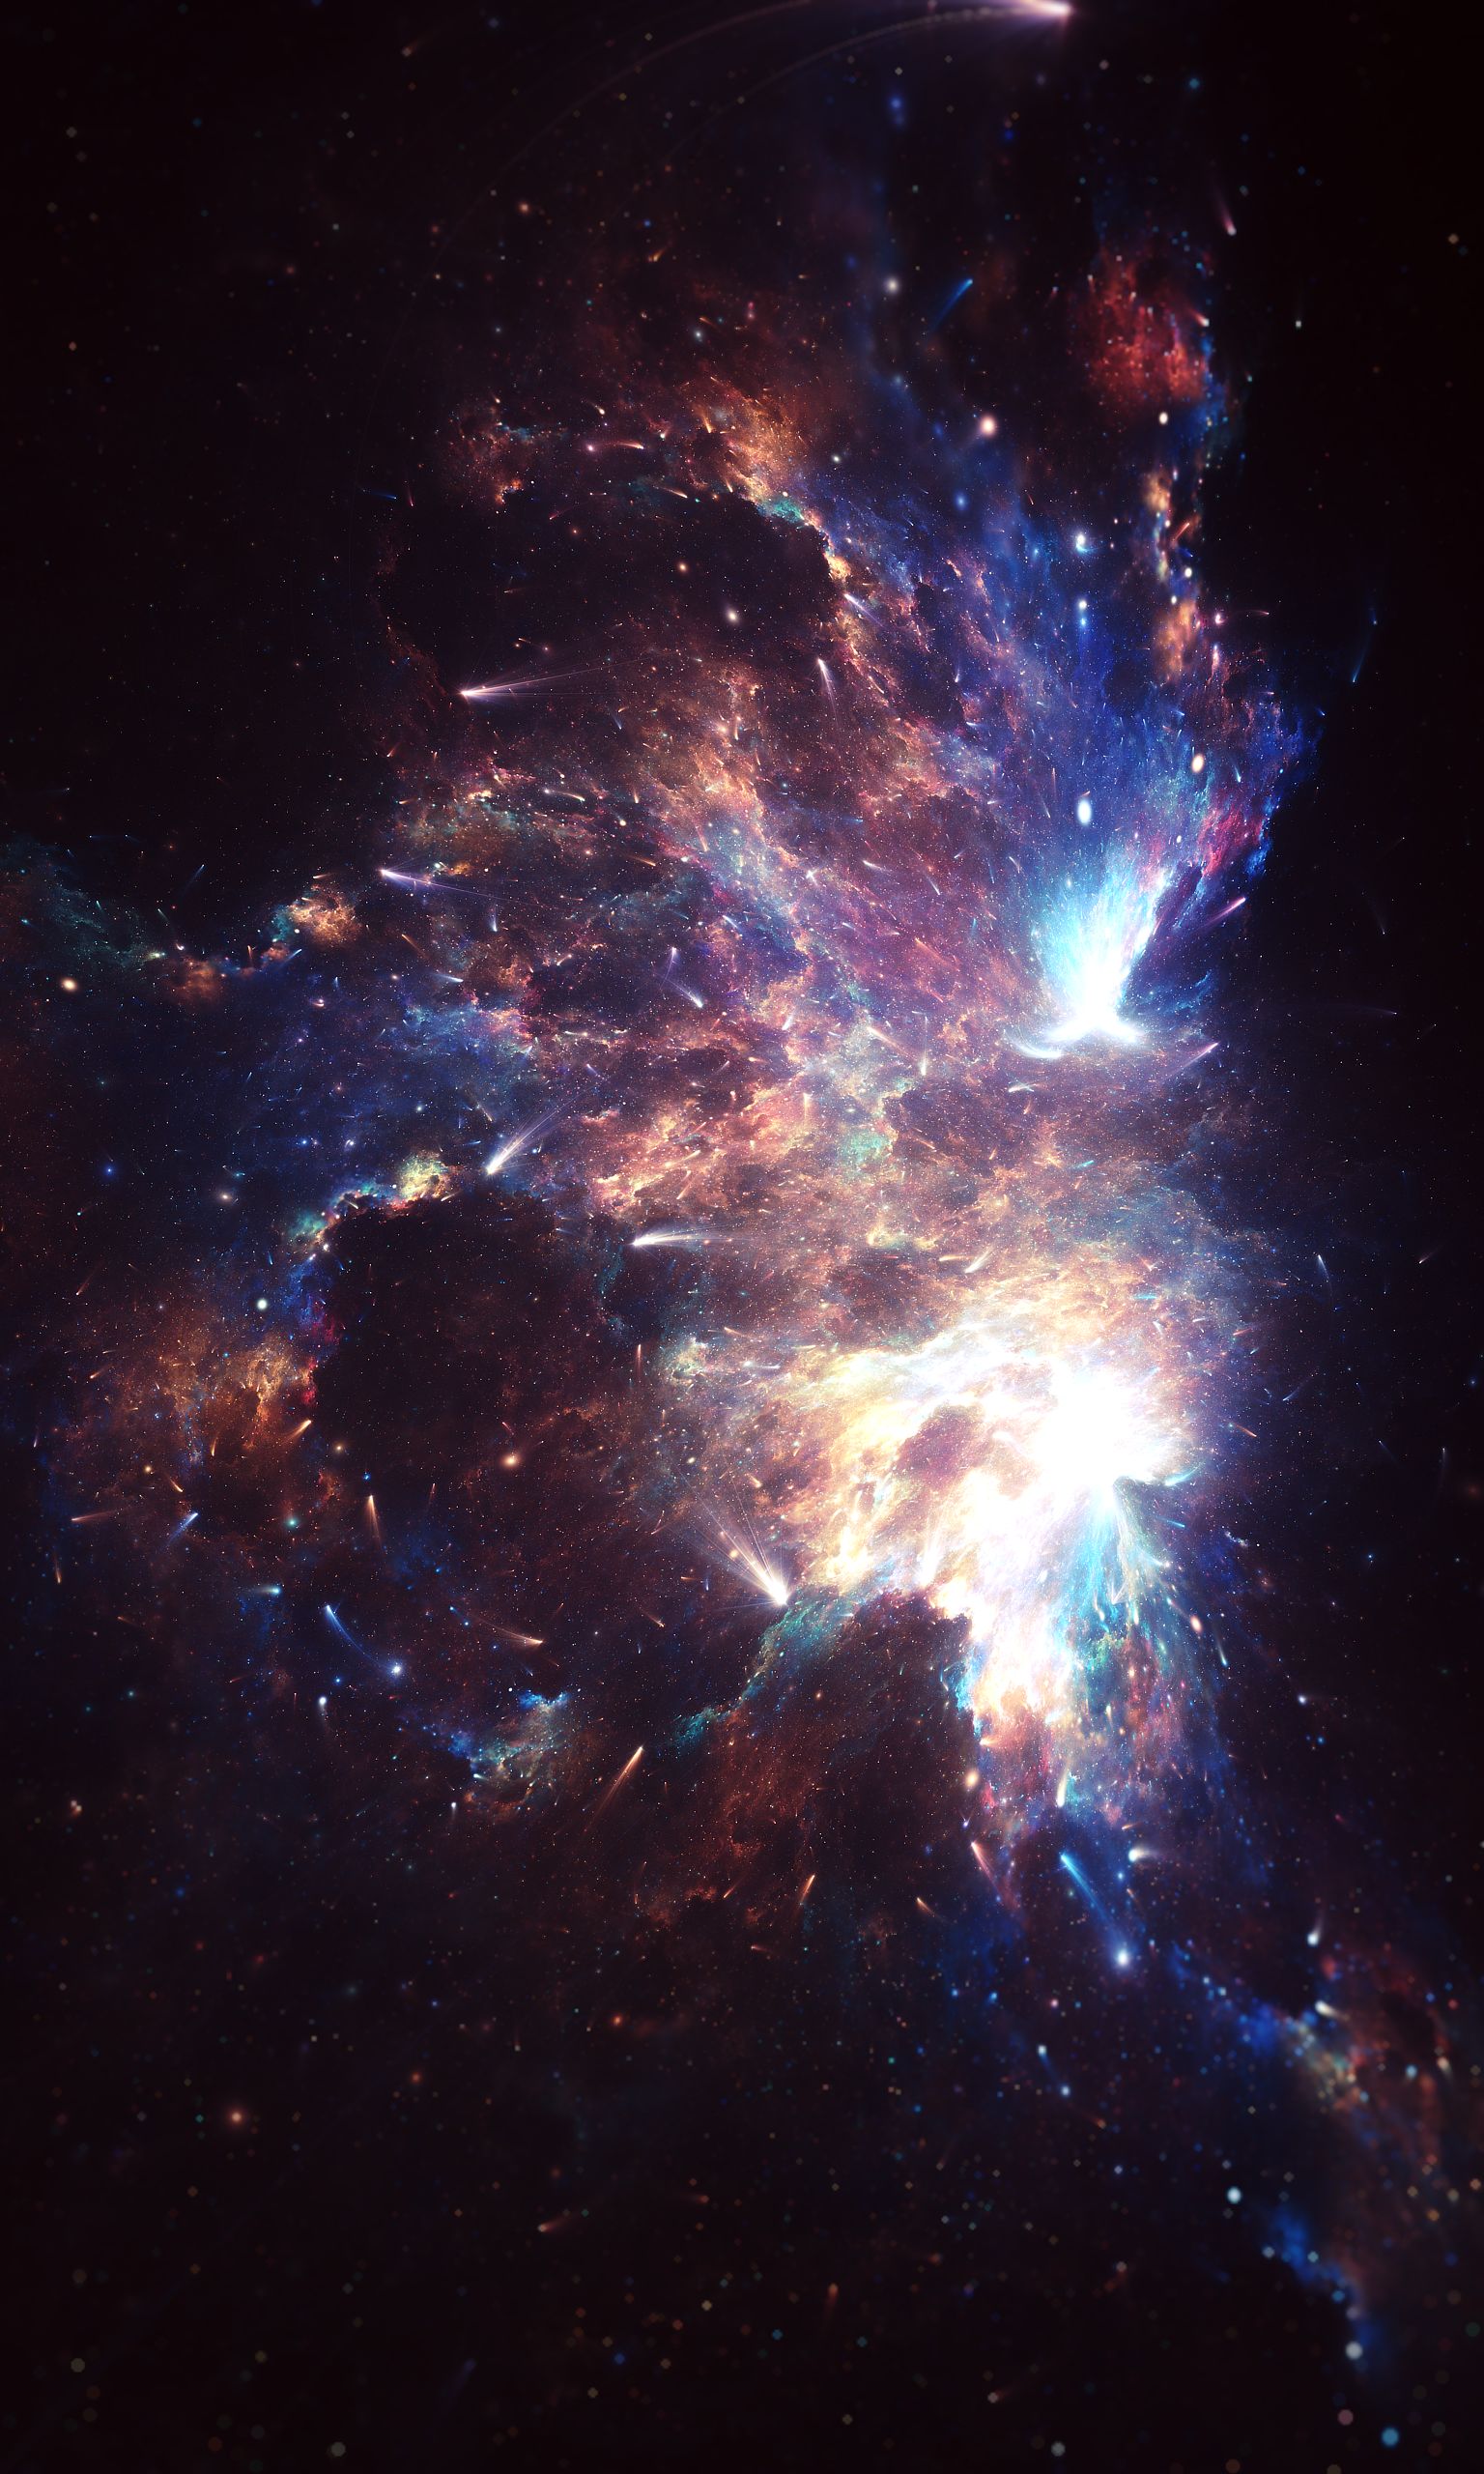 Popular Nebula Image for Phone